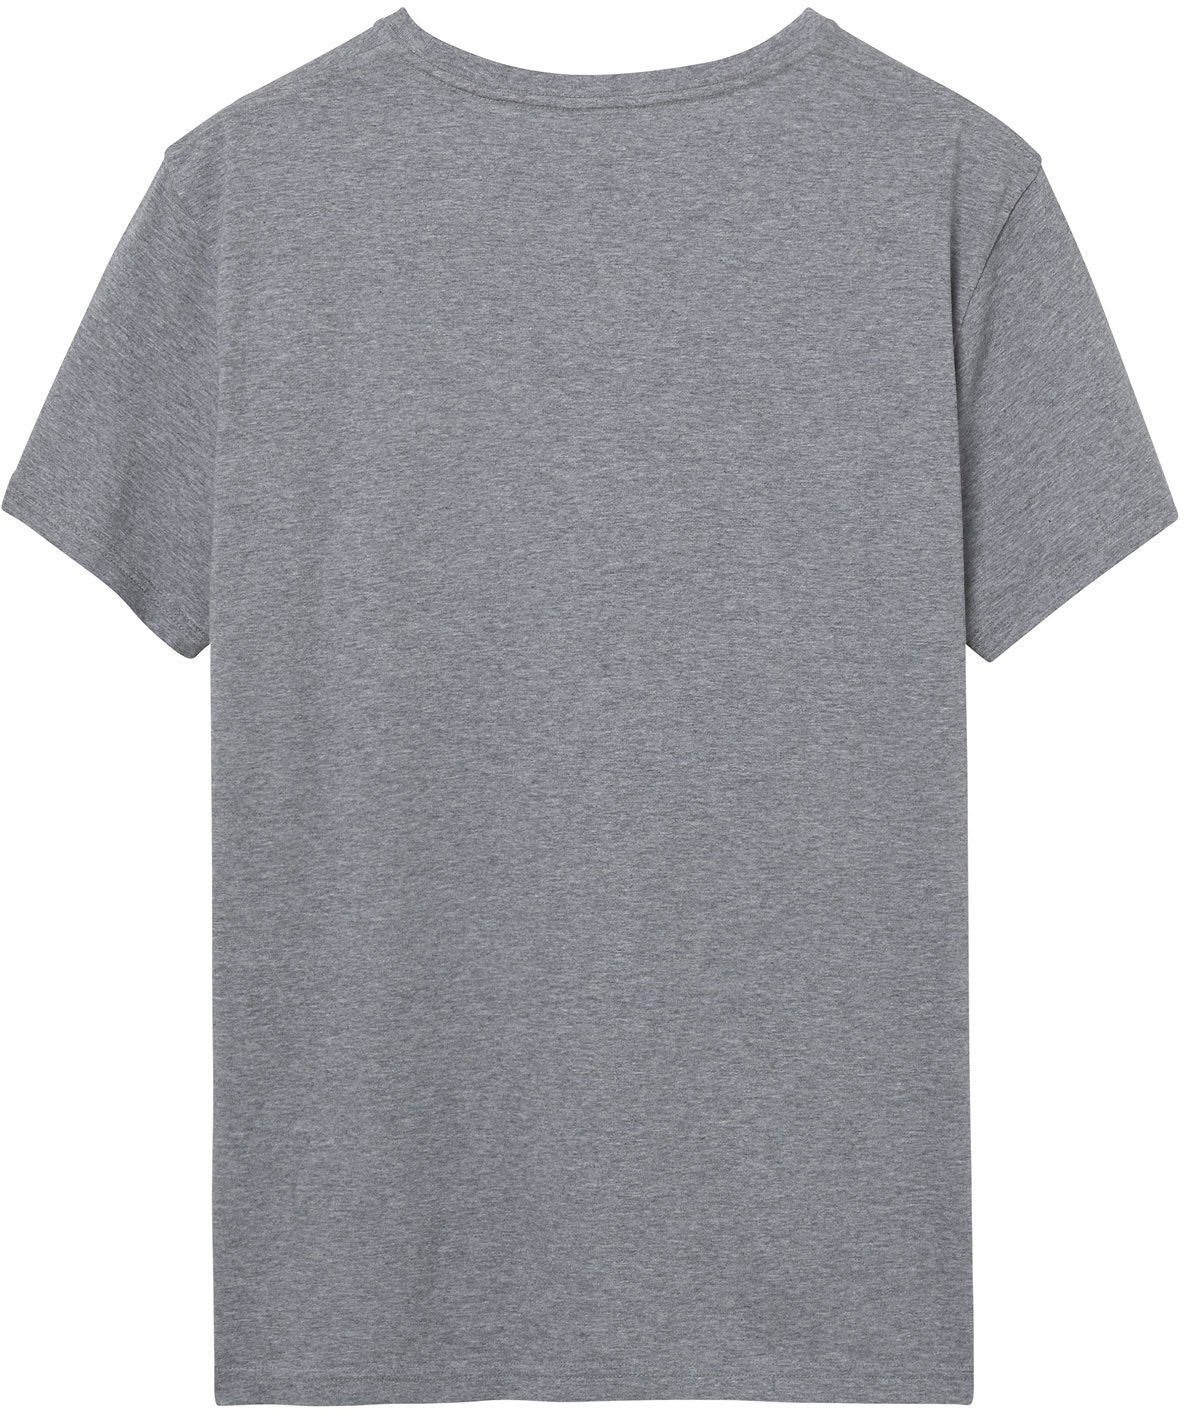 Gant SHIELD melange Markendruck grey Großer T-Shirt